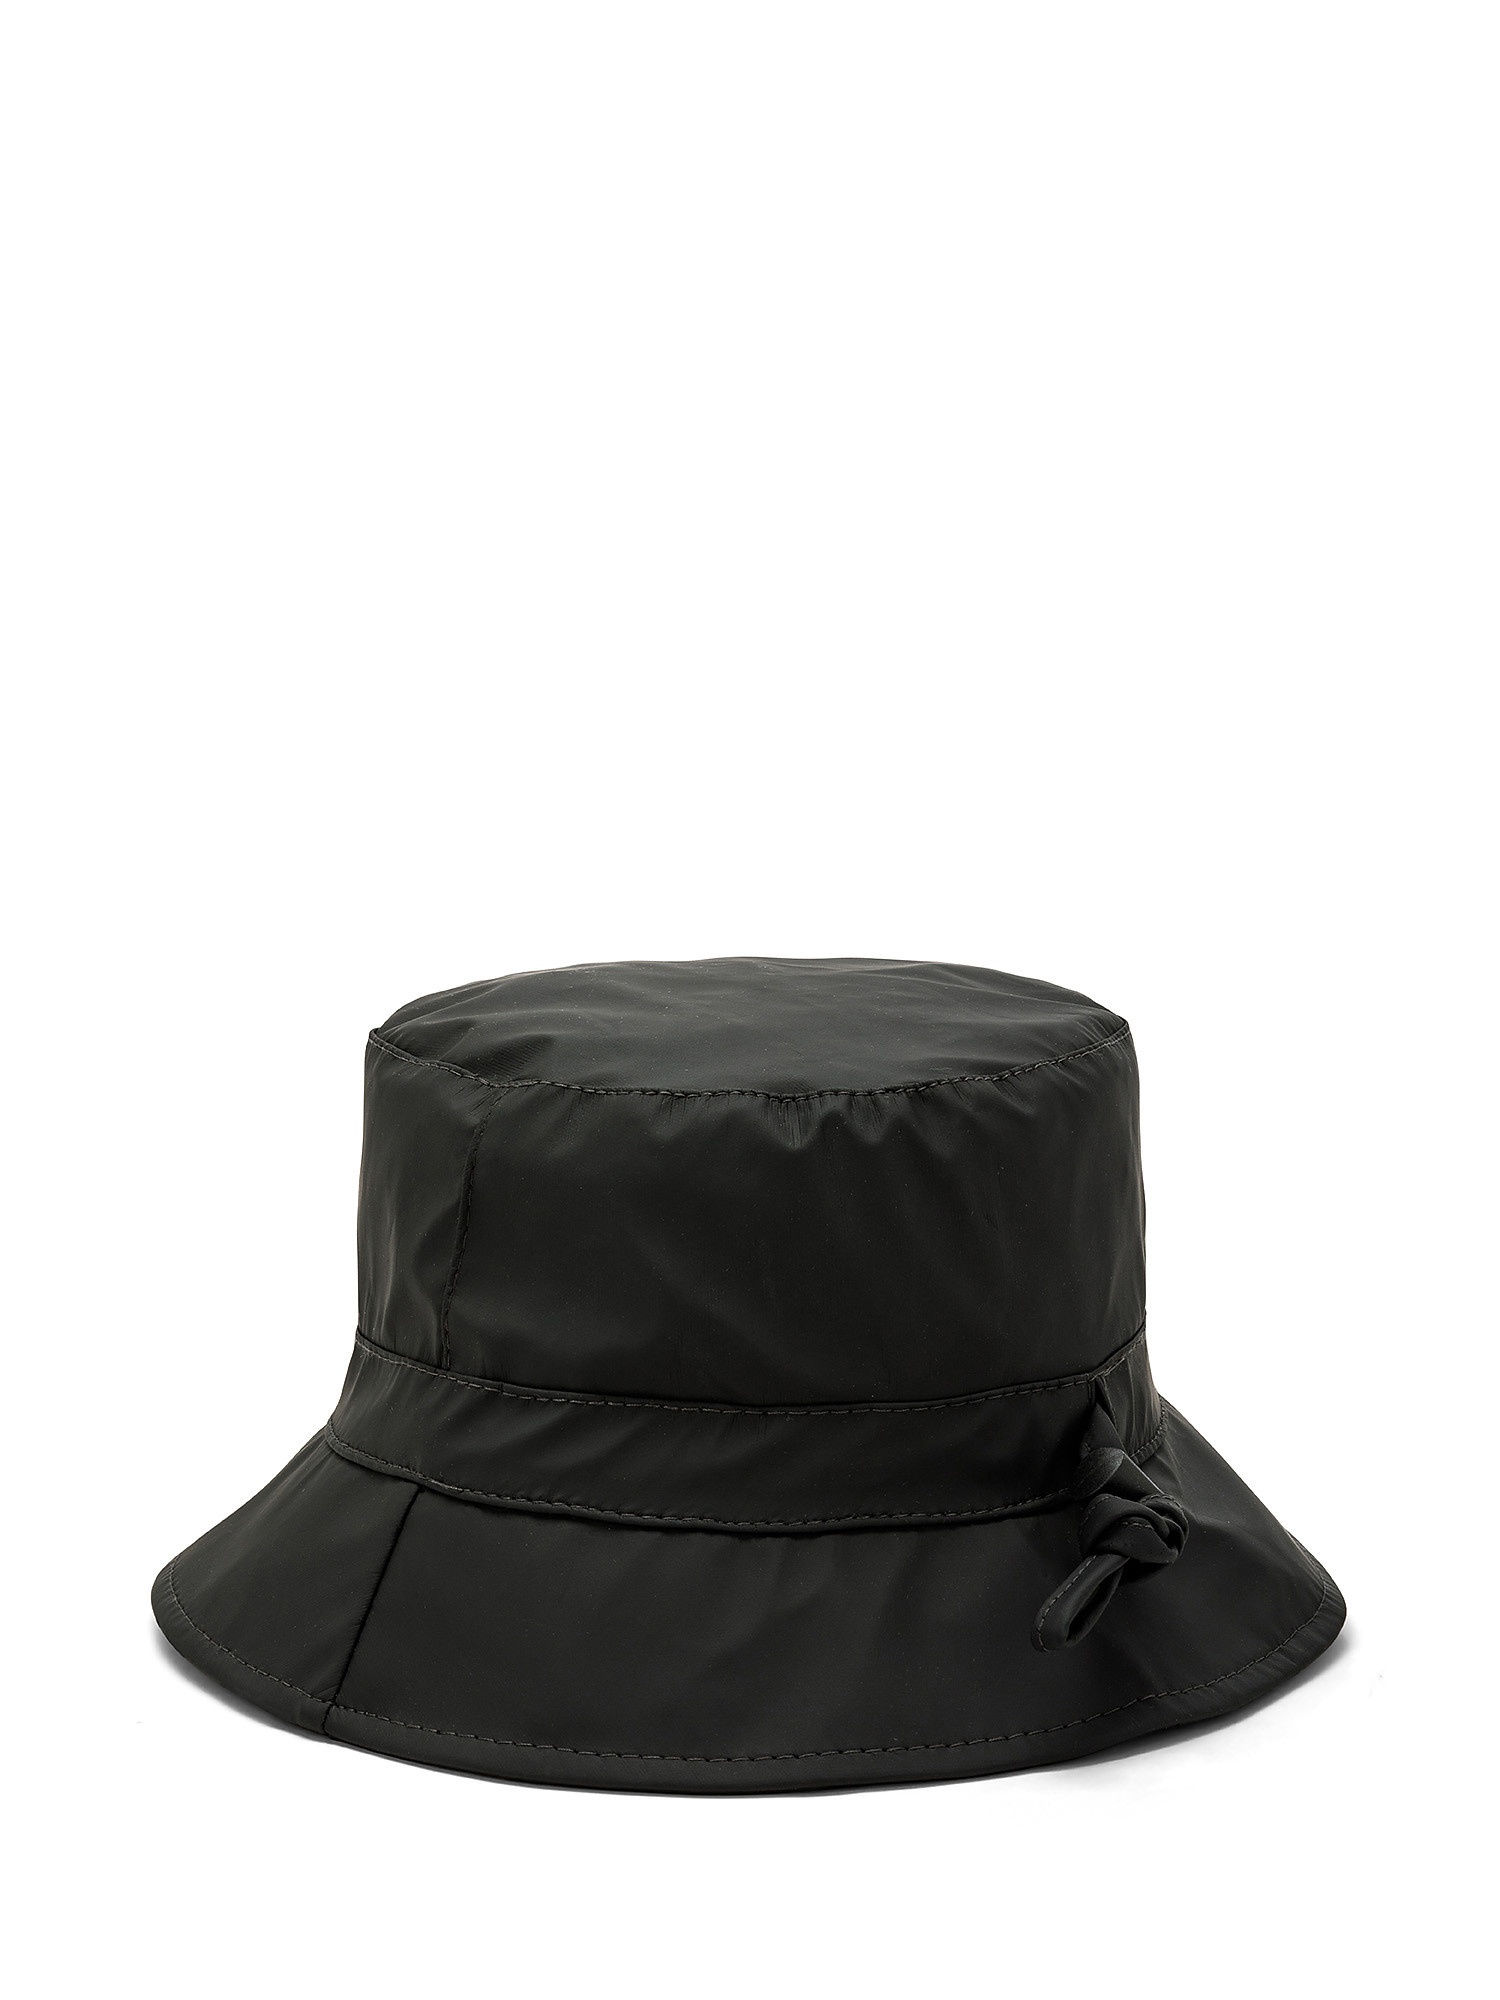 Koan - Rain hat, Black, large image number 0